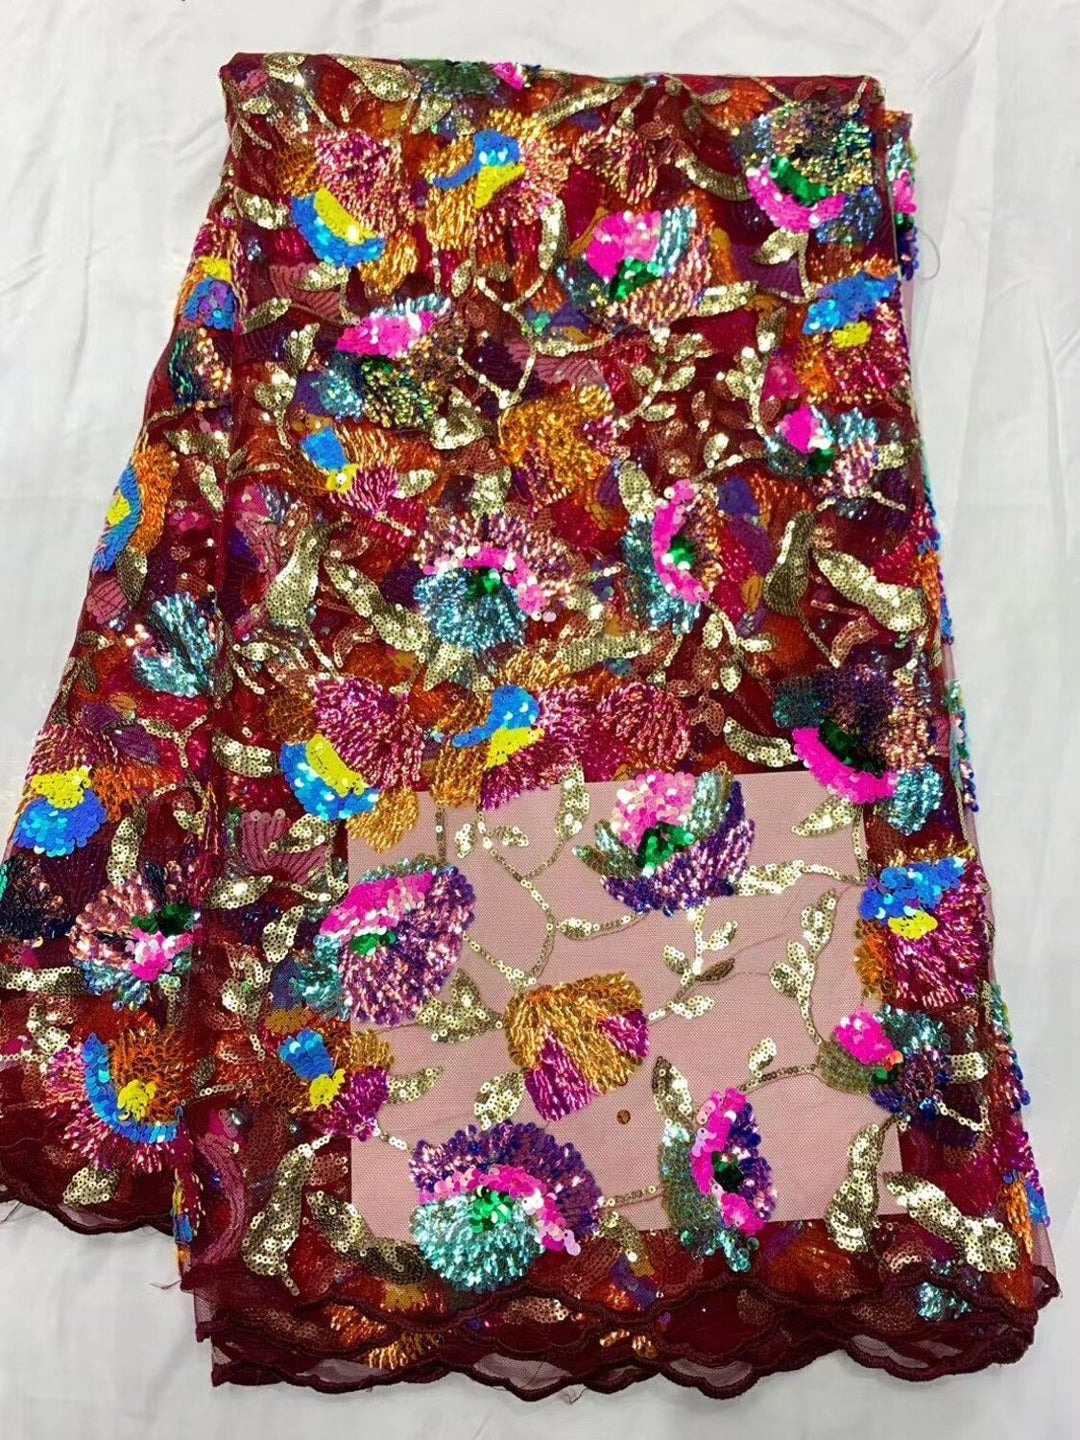 5 YARDS / 6 COLORS / Linoa Iridescent Glitter Sequin Embroidery